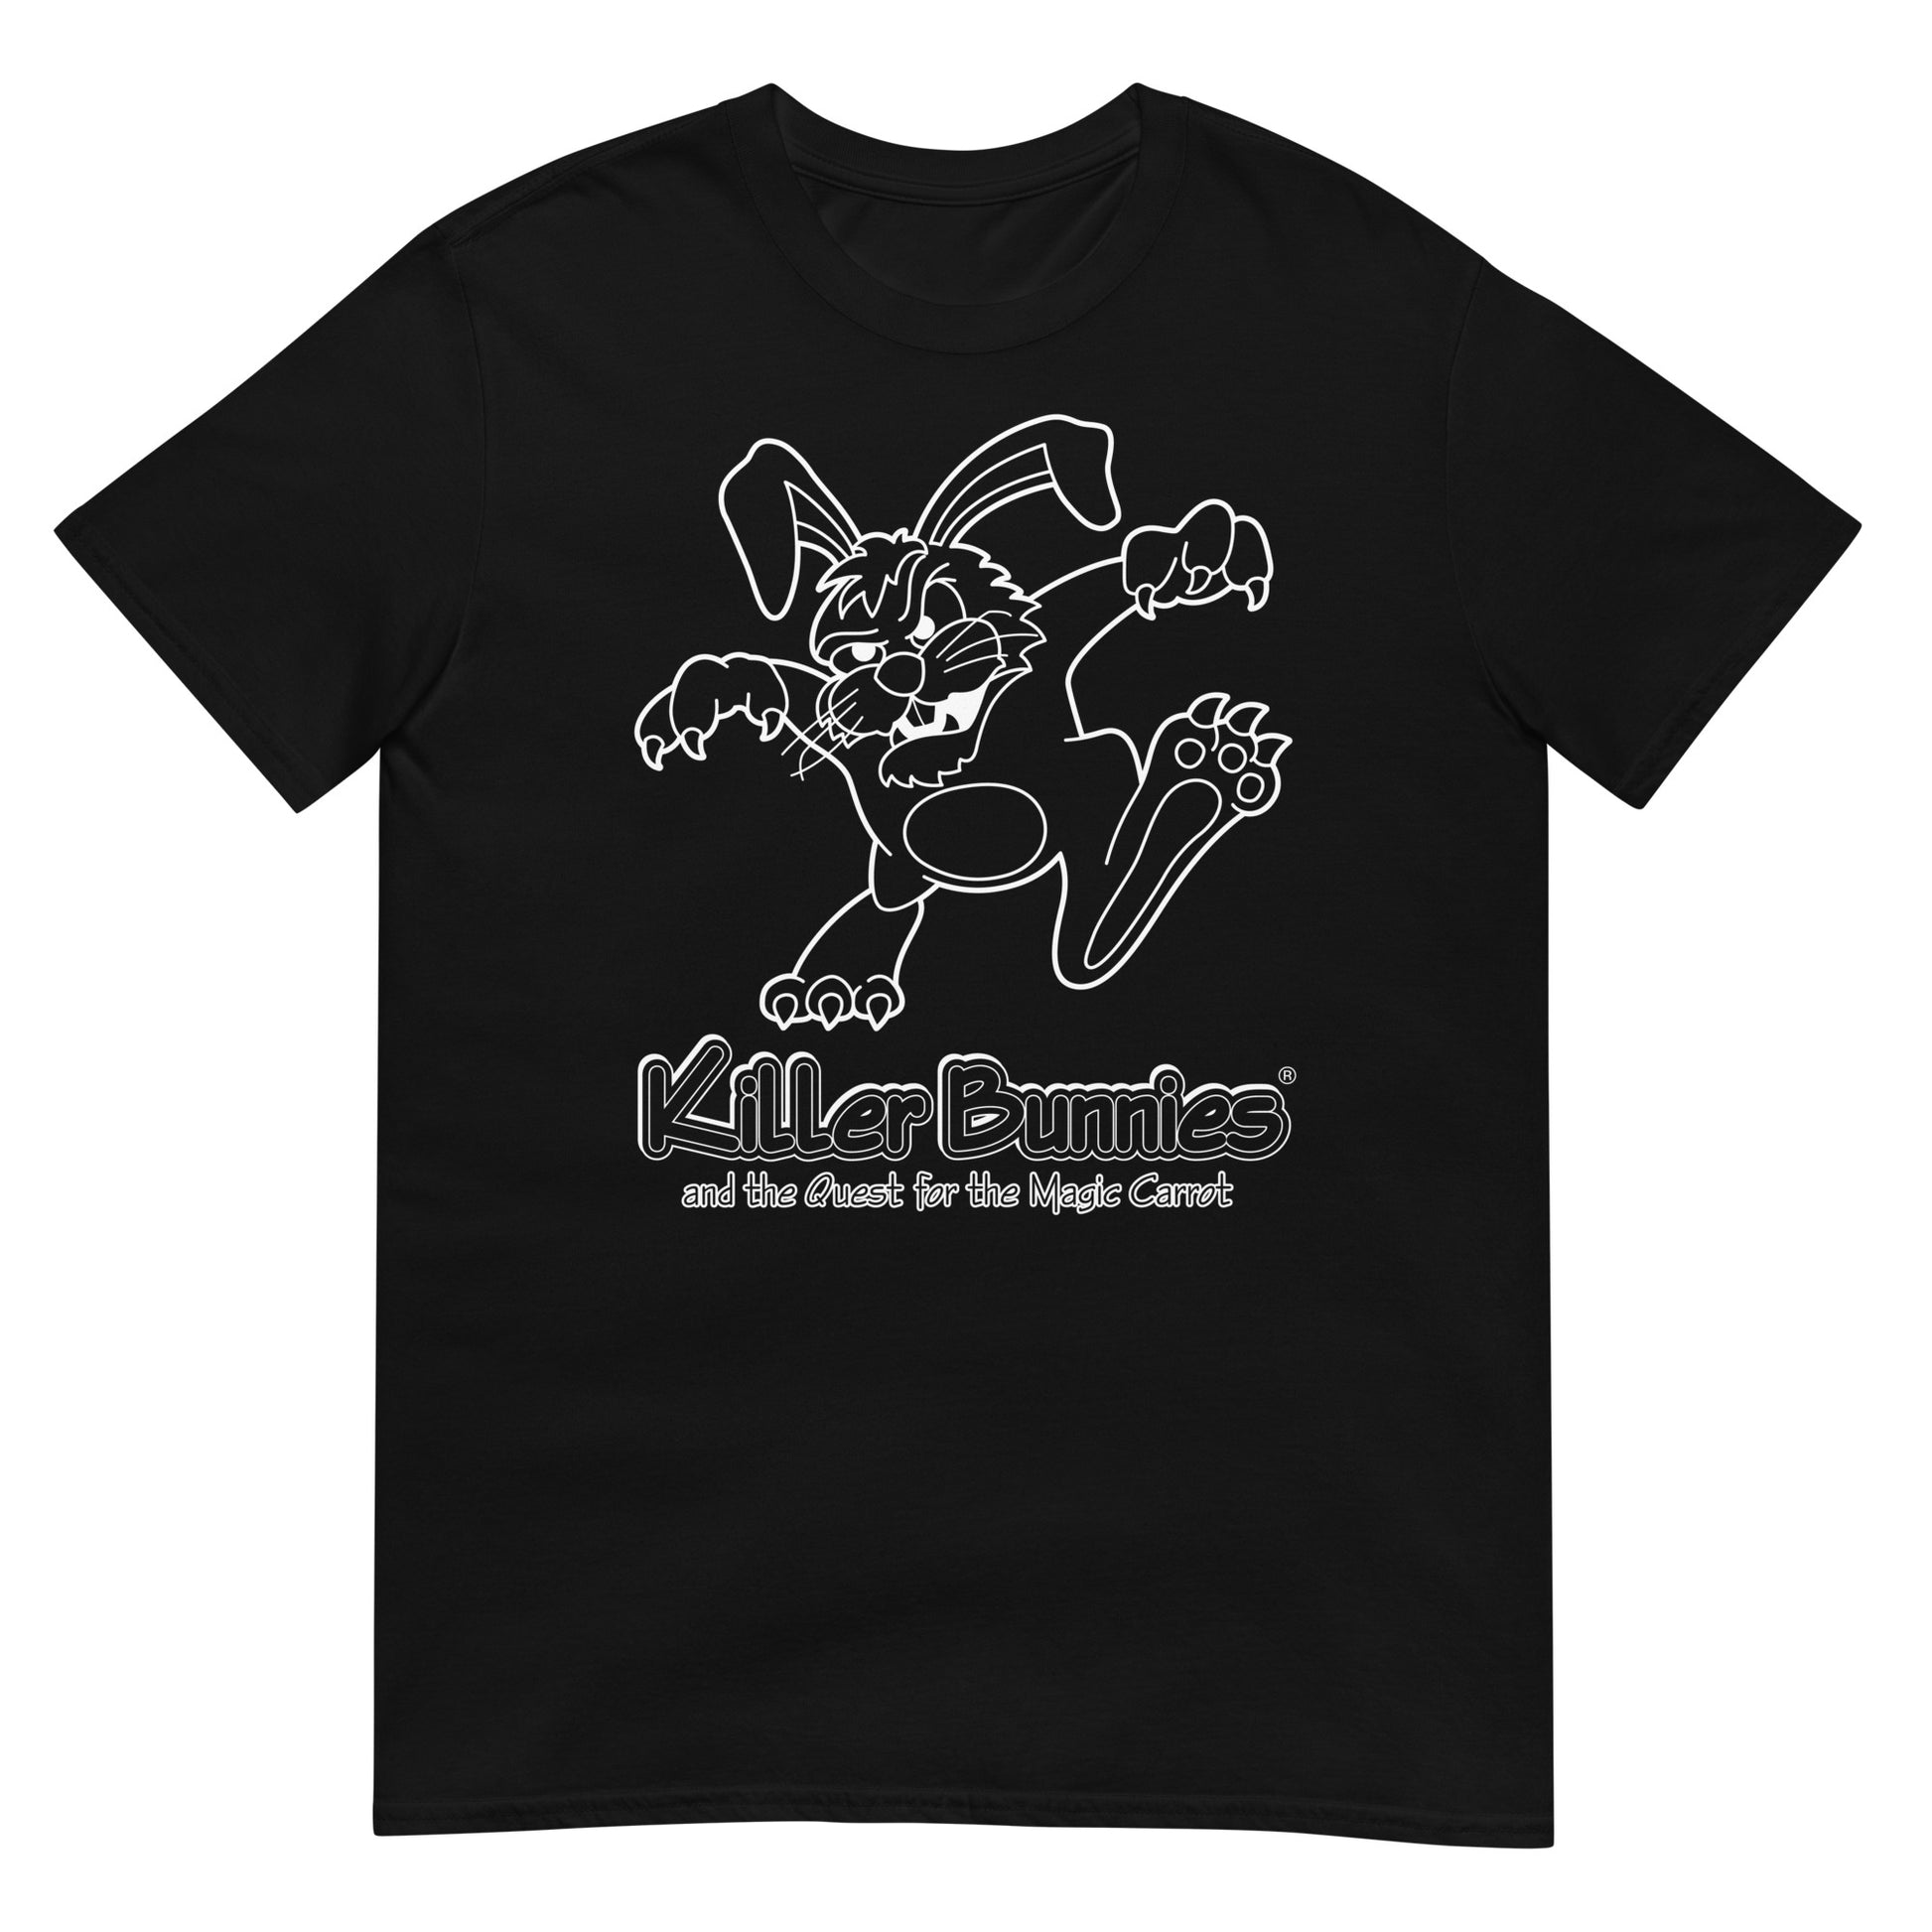 Killer Bunnies Illuminated Unisex T-Shirt - Black